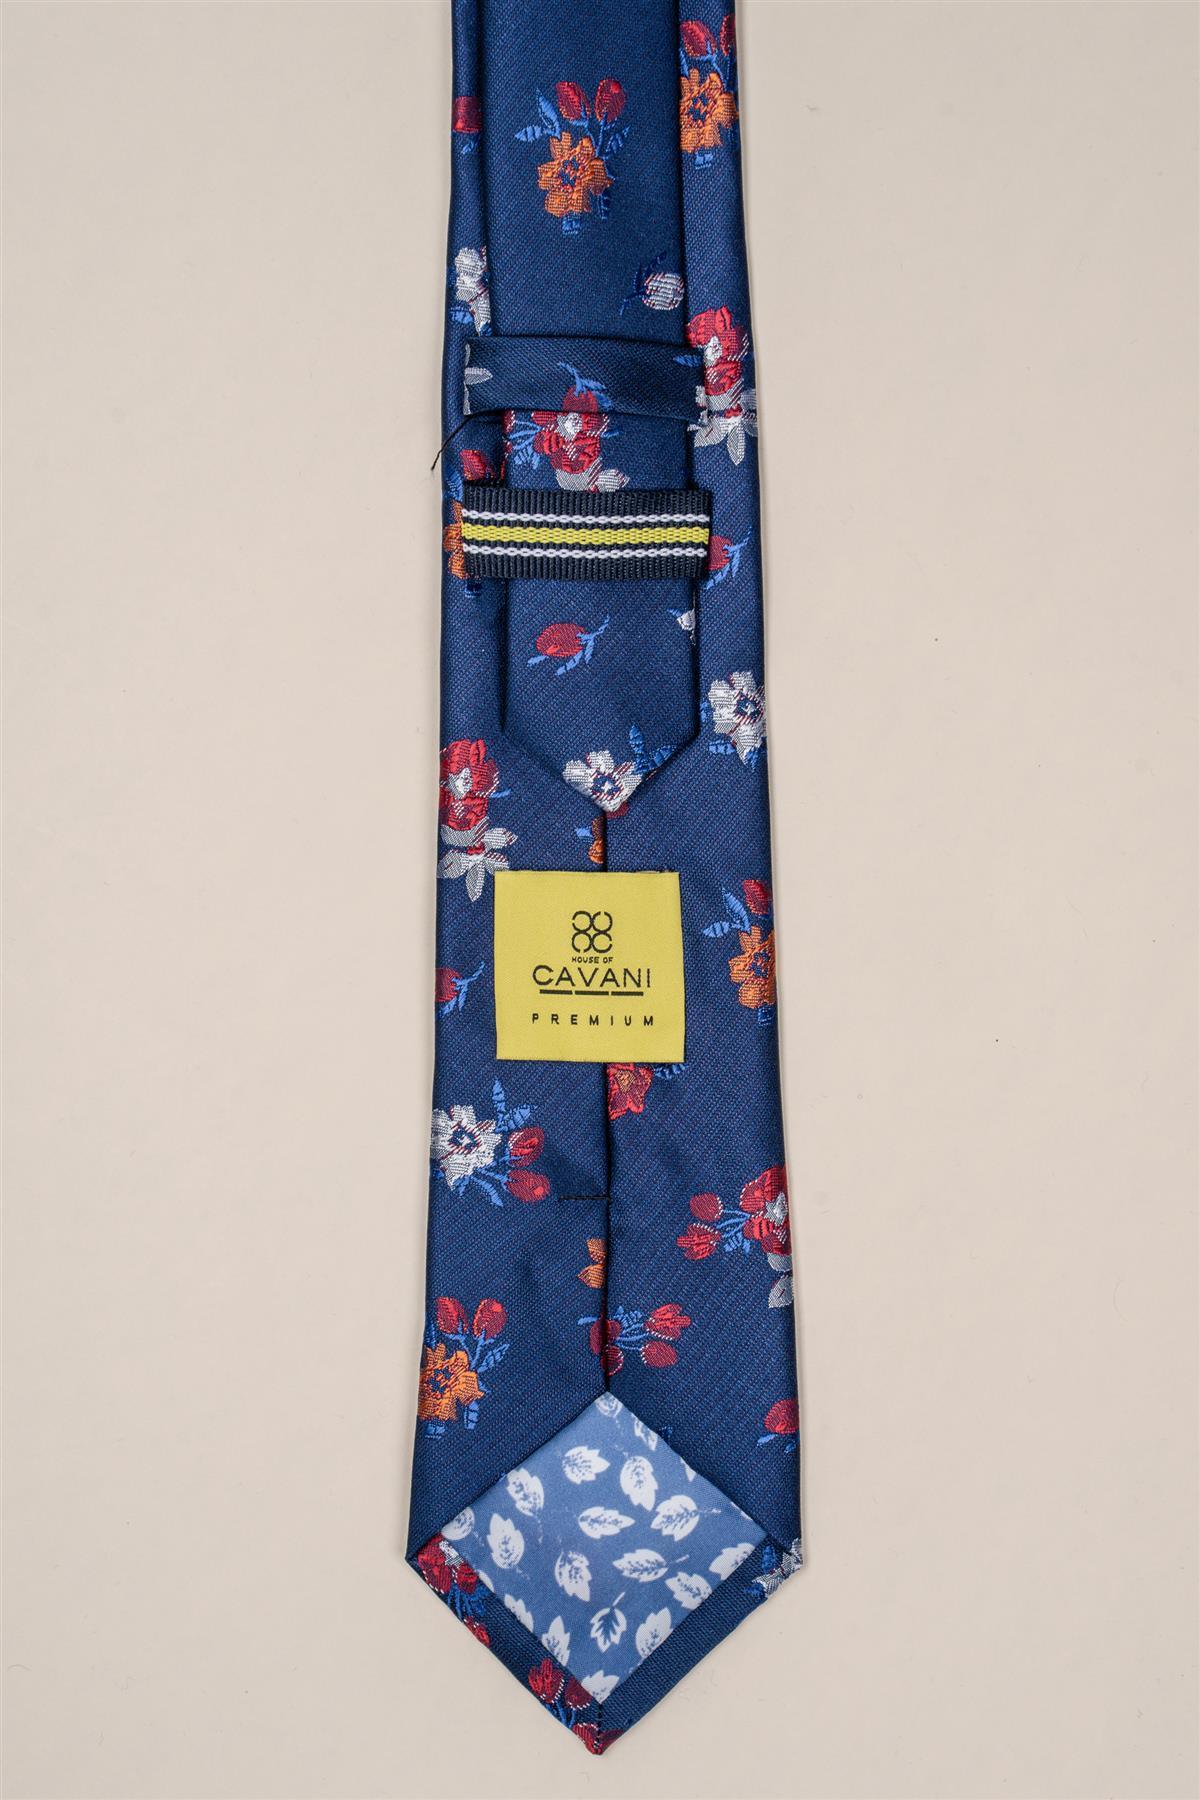 CV809 patterned tie